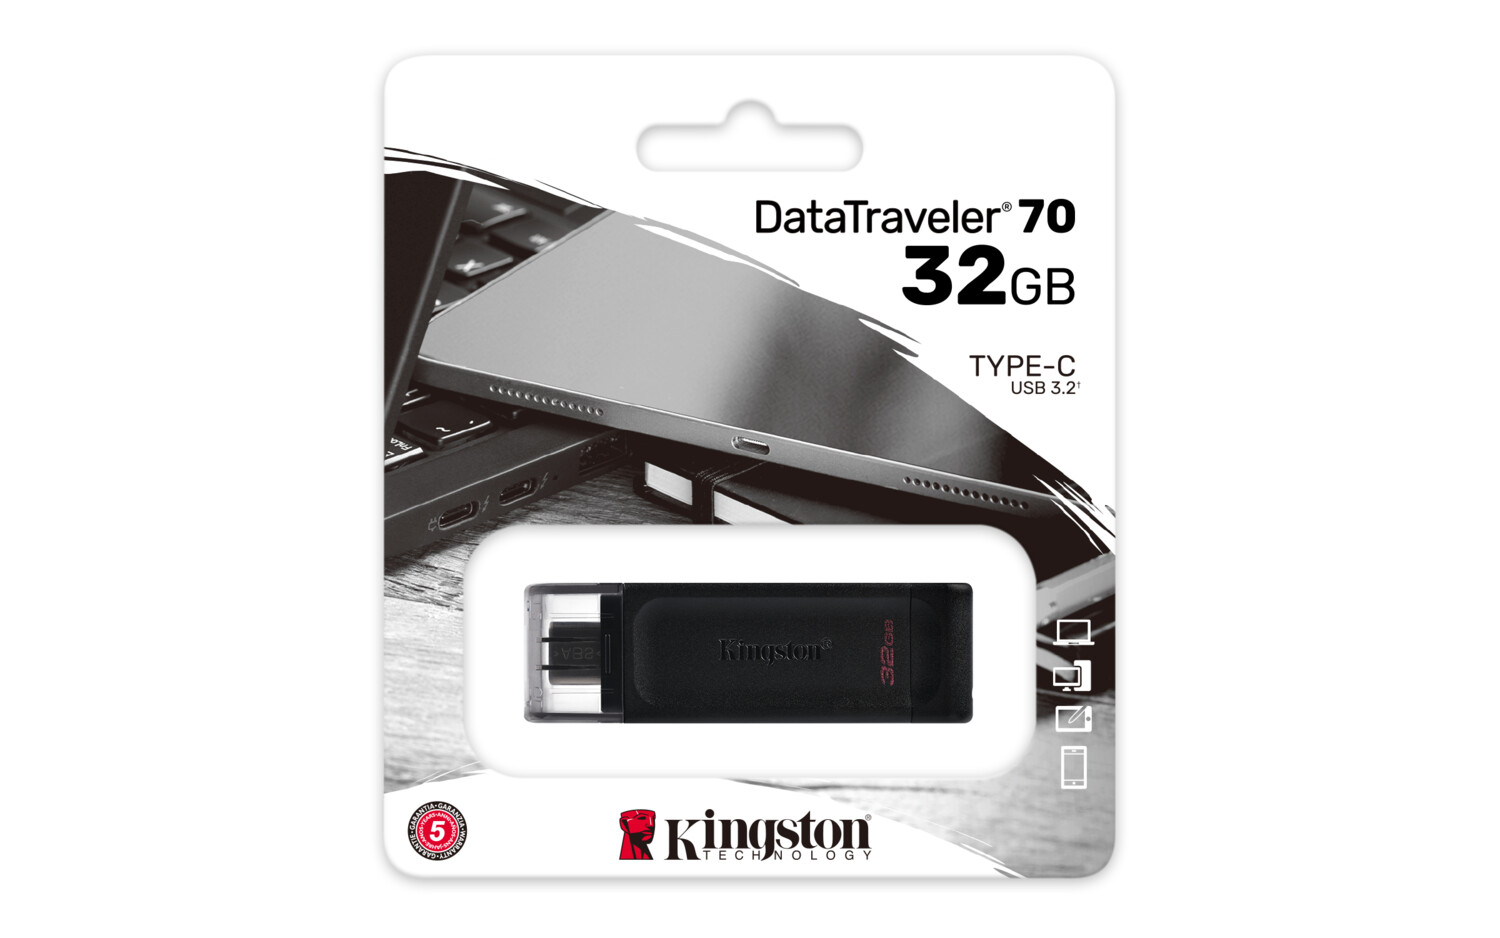 Kingston DataTraveler microDuo 3C Gen3 128 Go - Clé USB Kingston sur